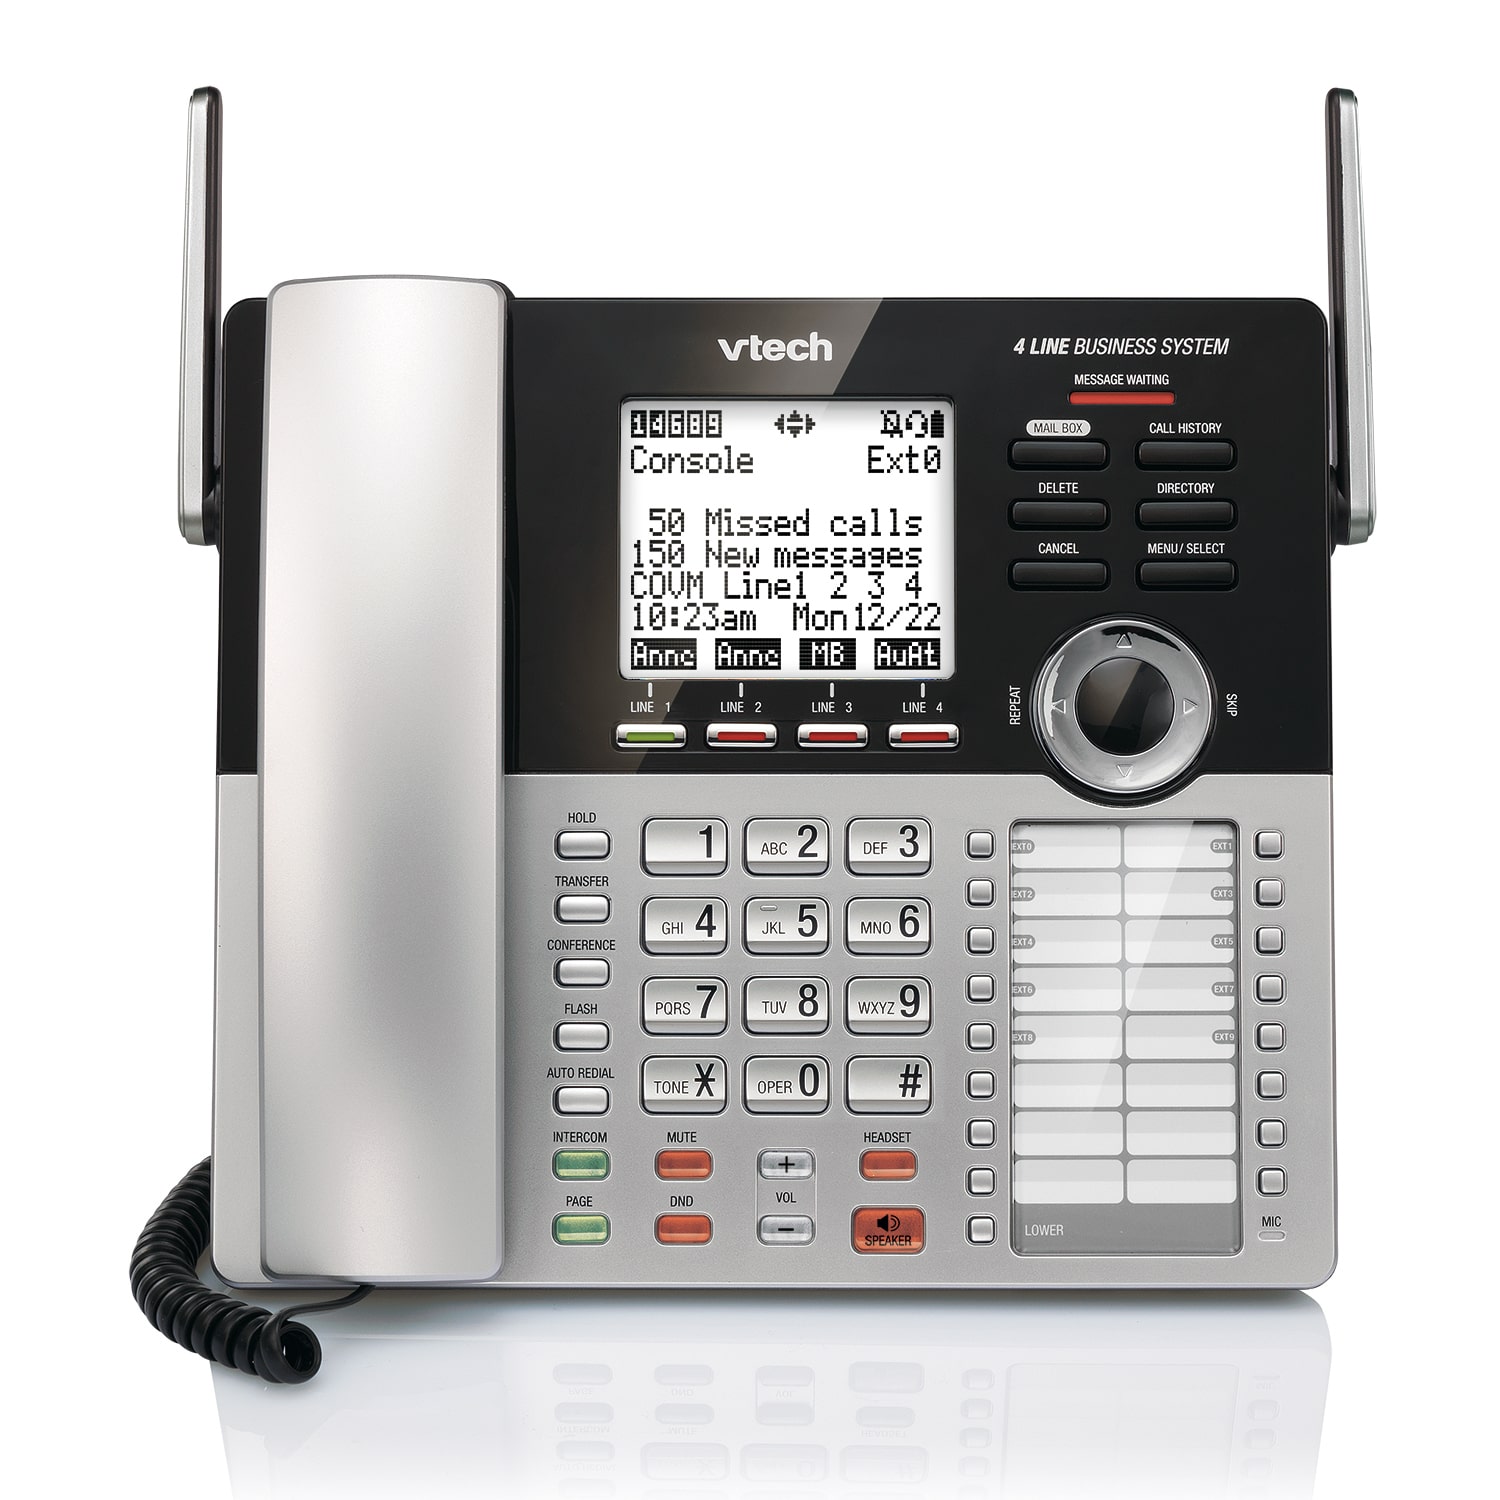 Vtech 4 Line Business System Voicemail Setup